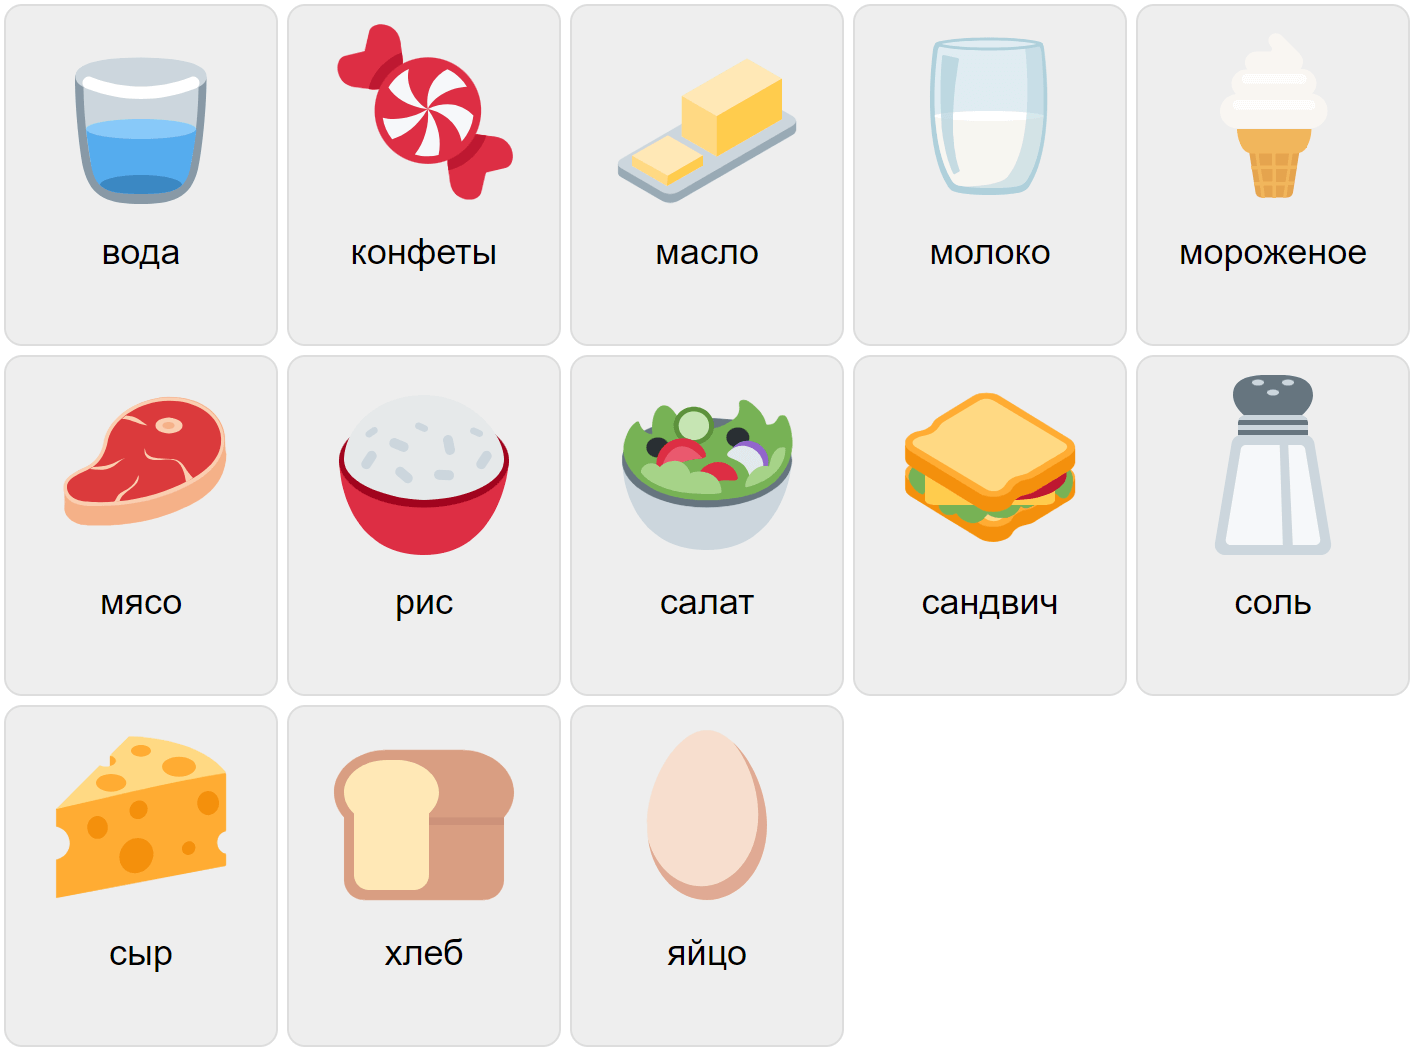 Food in Russian 1